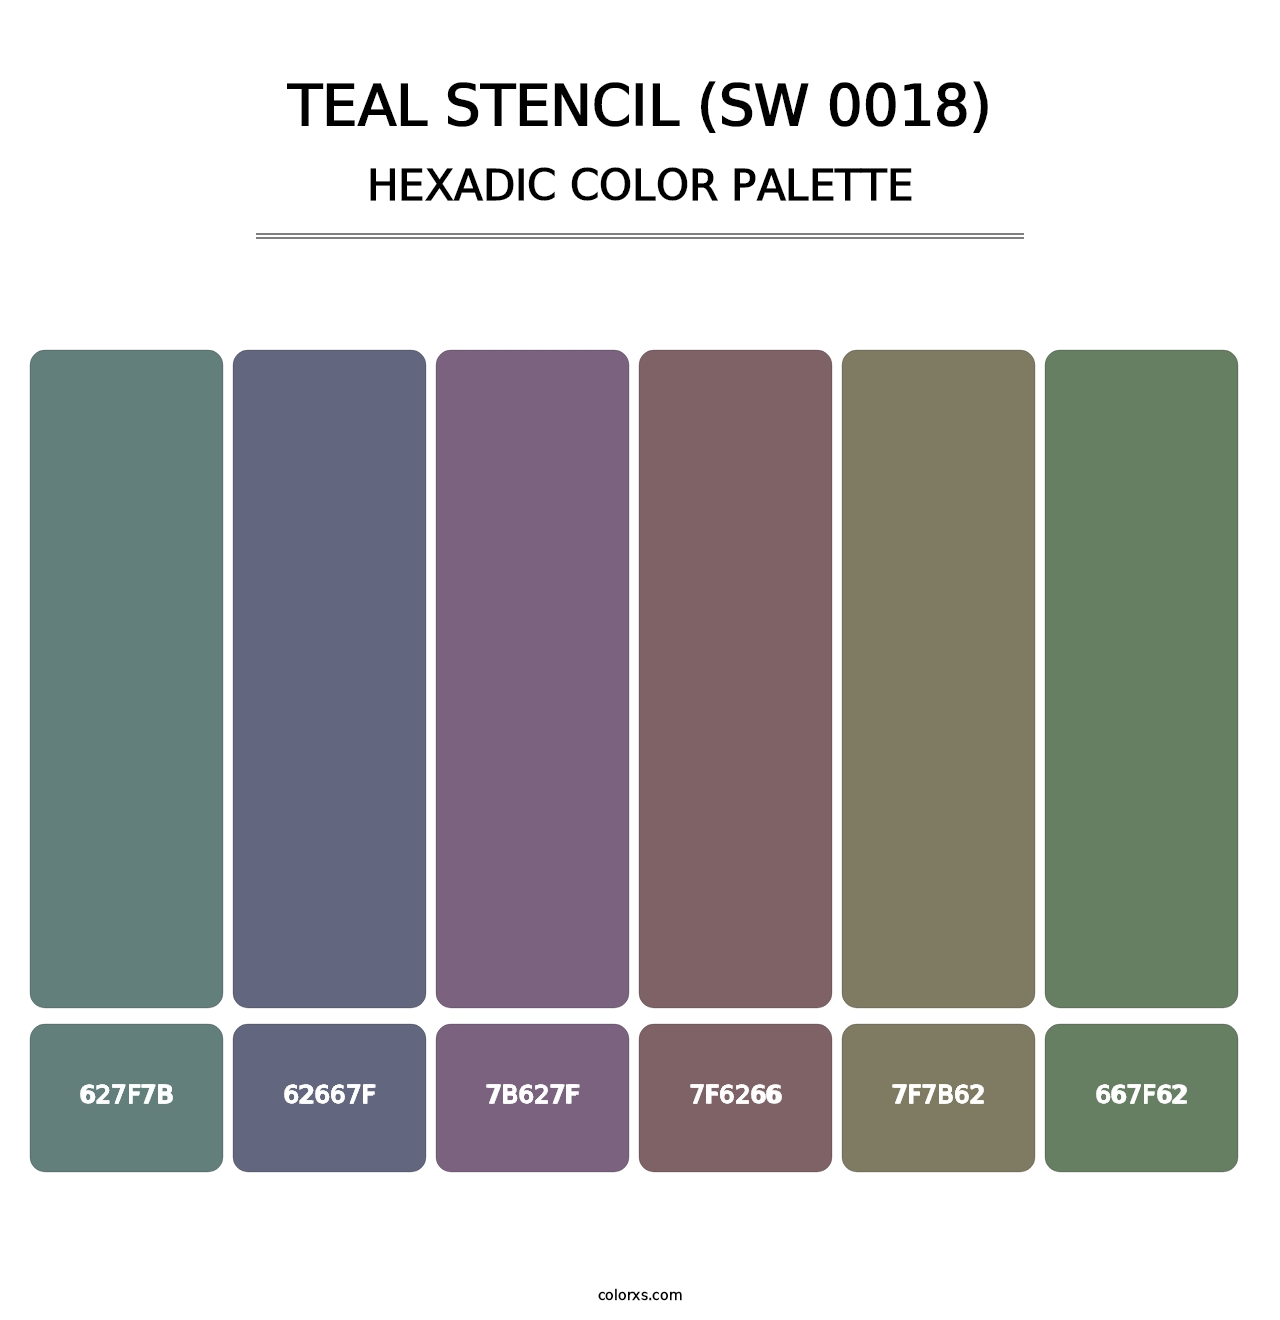 Teal Stencil (SW 0018) - Hexadic Color Palette